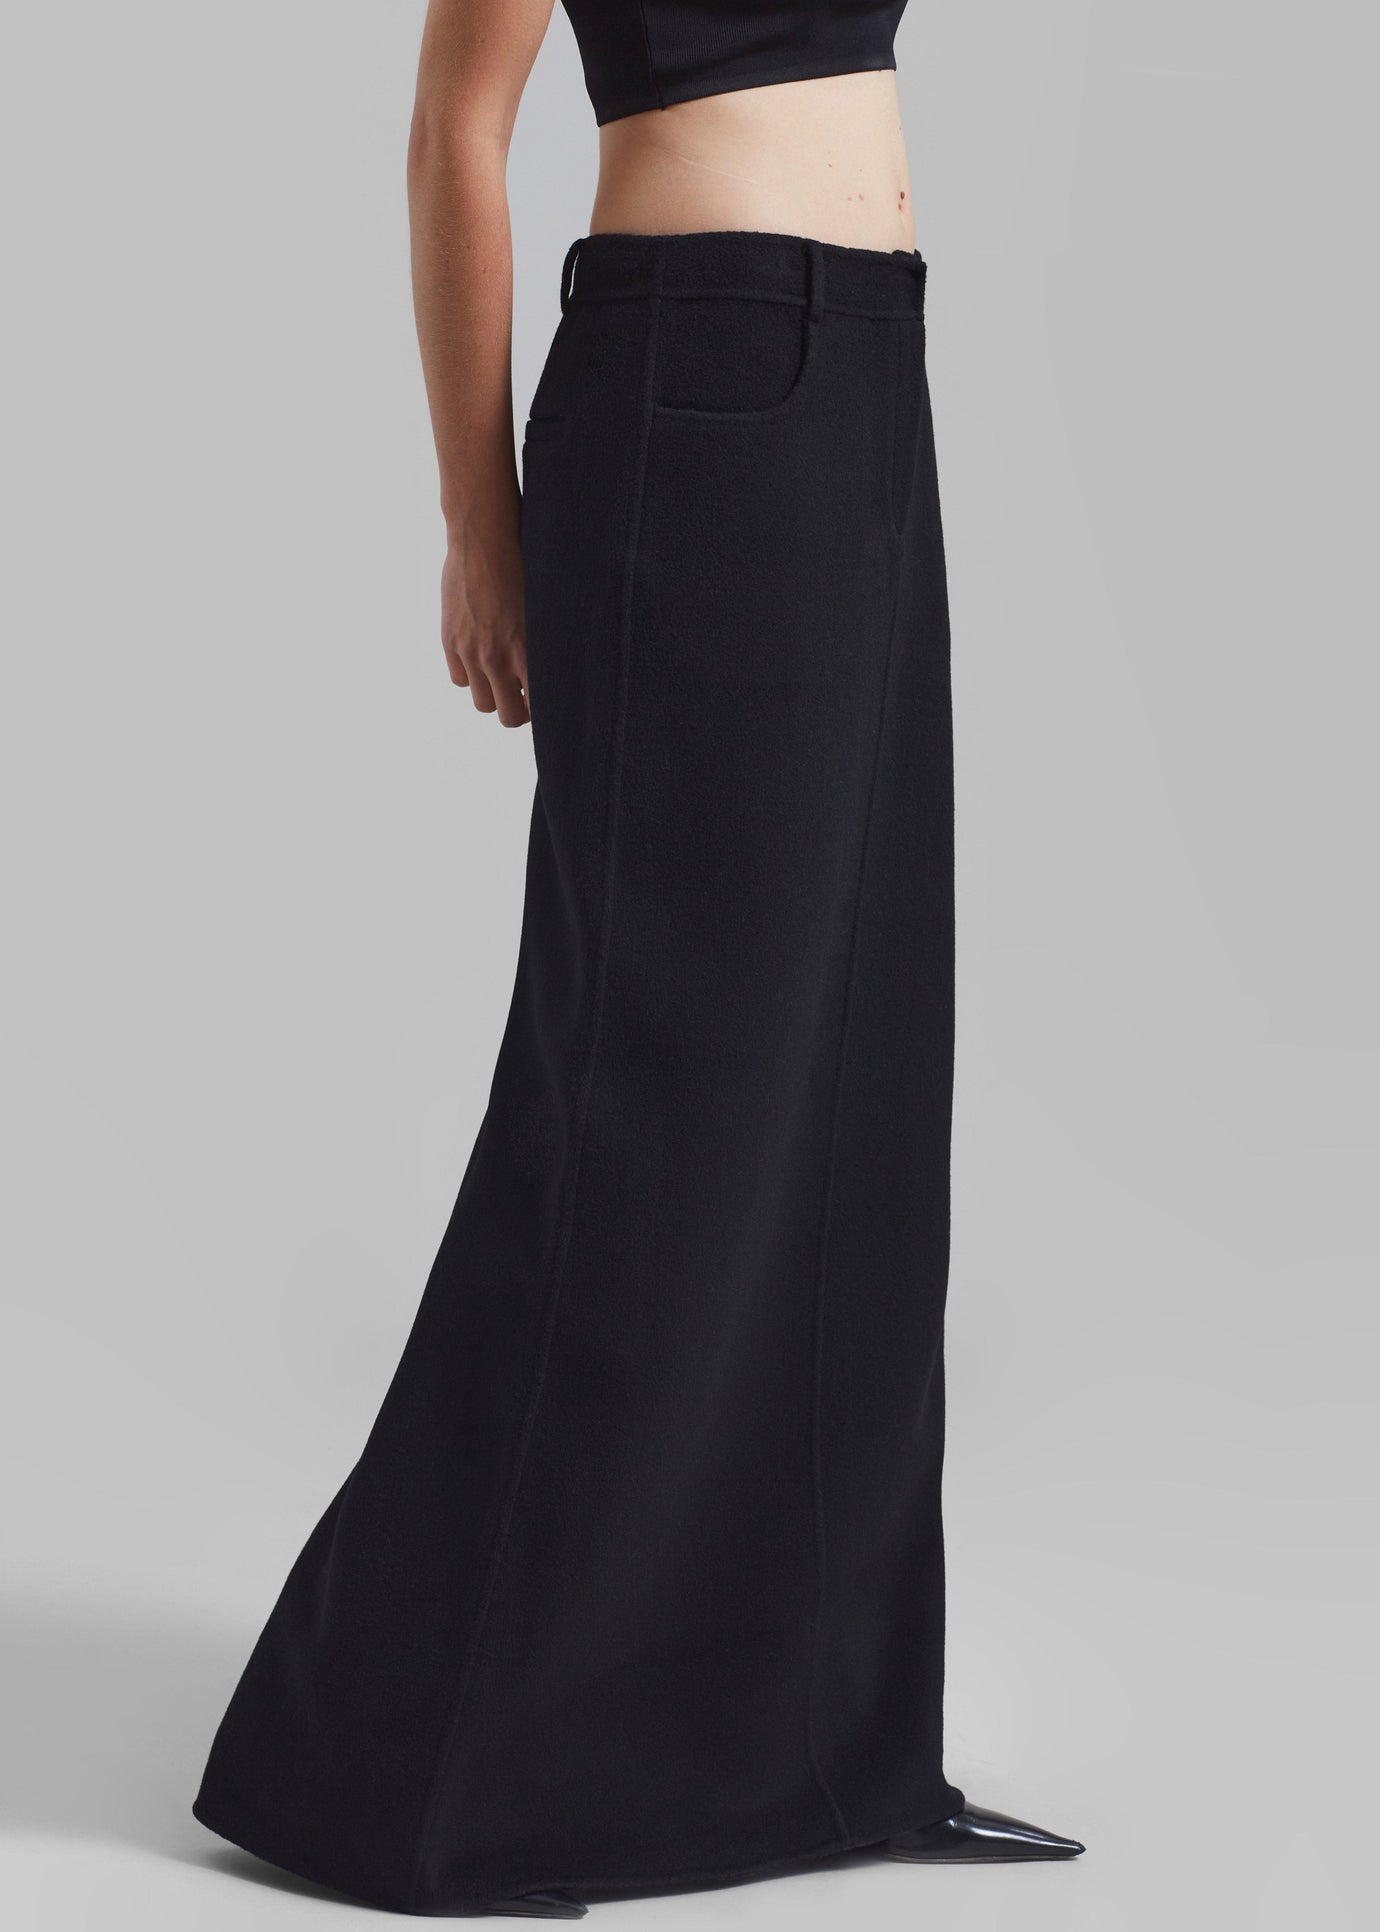 Malvo Long Wool Pencil Skirt - Black - 1